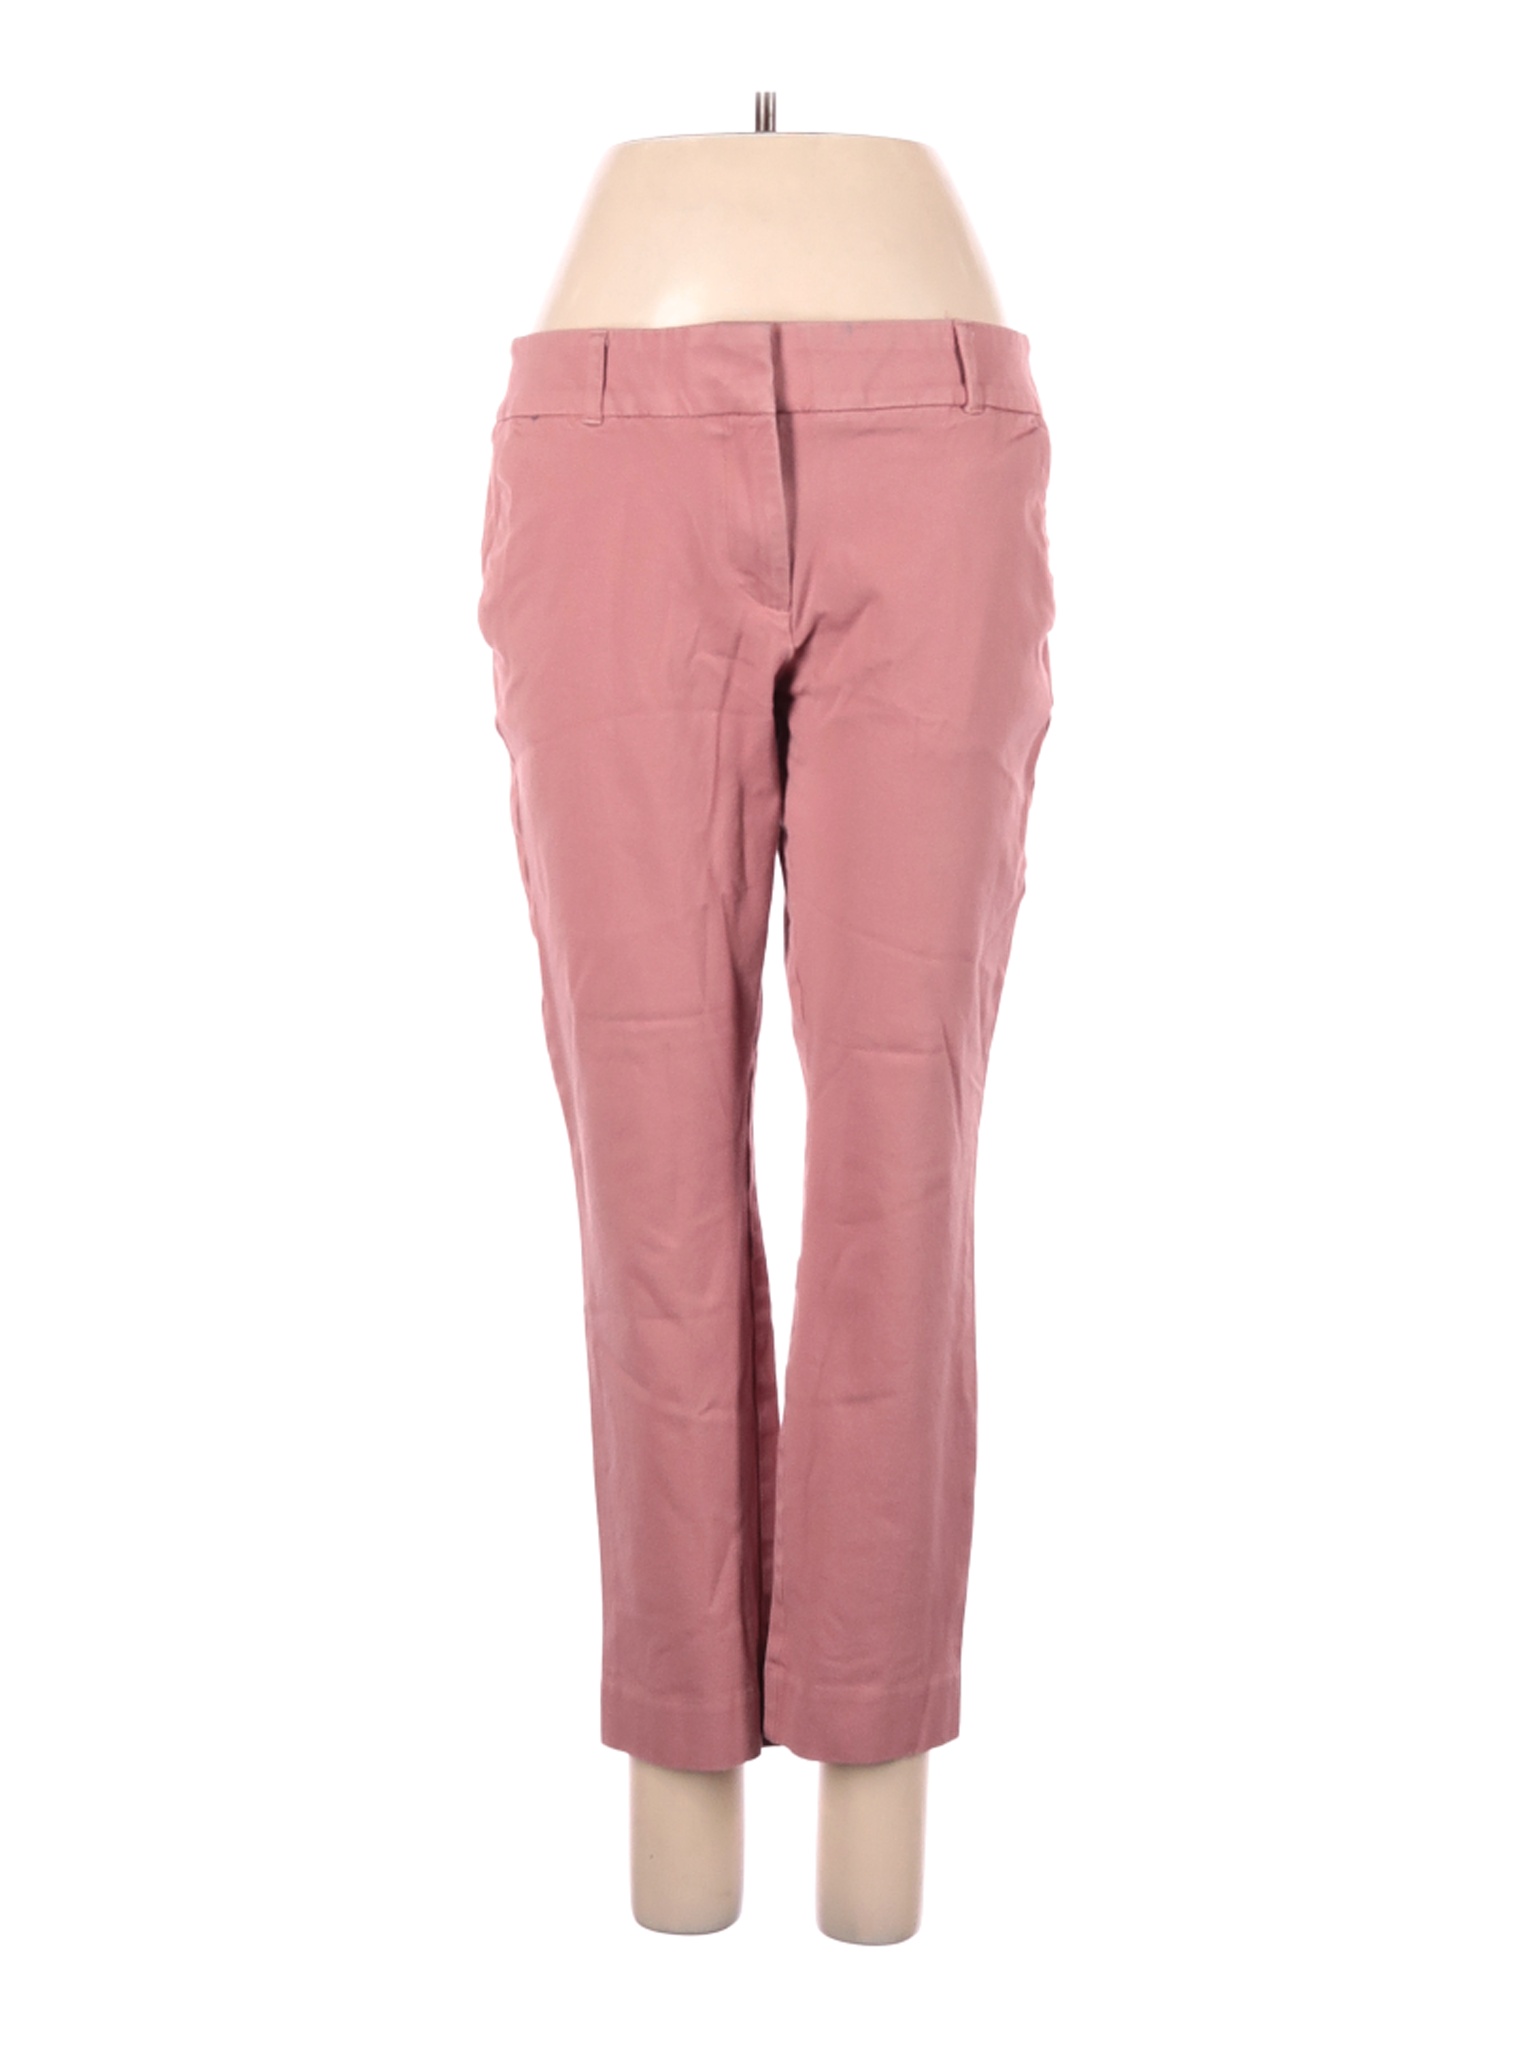 Ann Taylor LOFT Women Pink Casual Pants 10 Petites | eBay